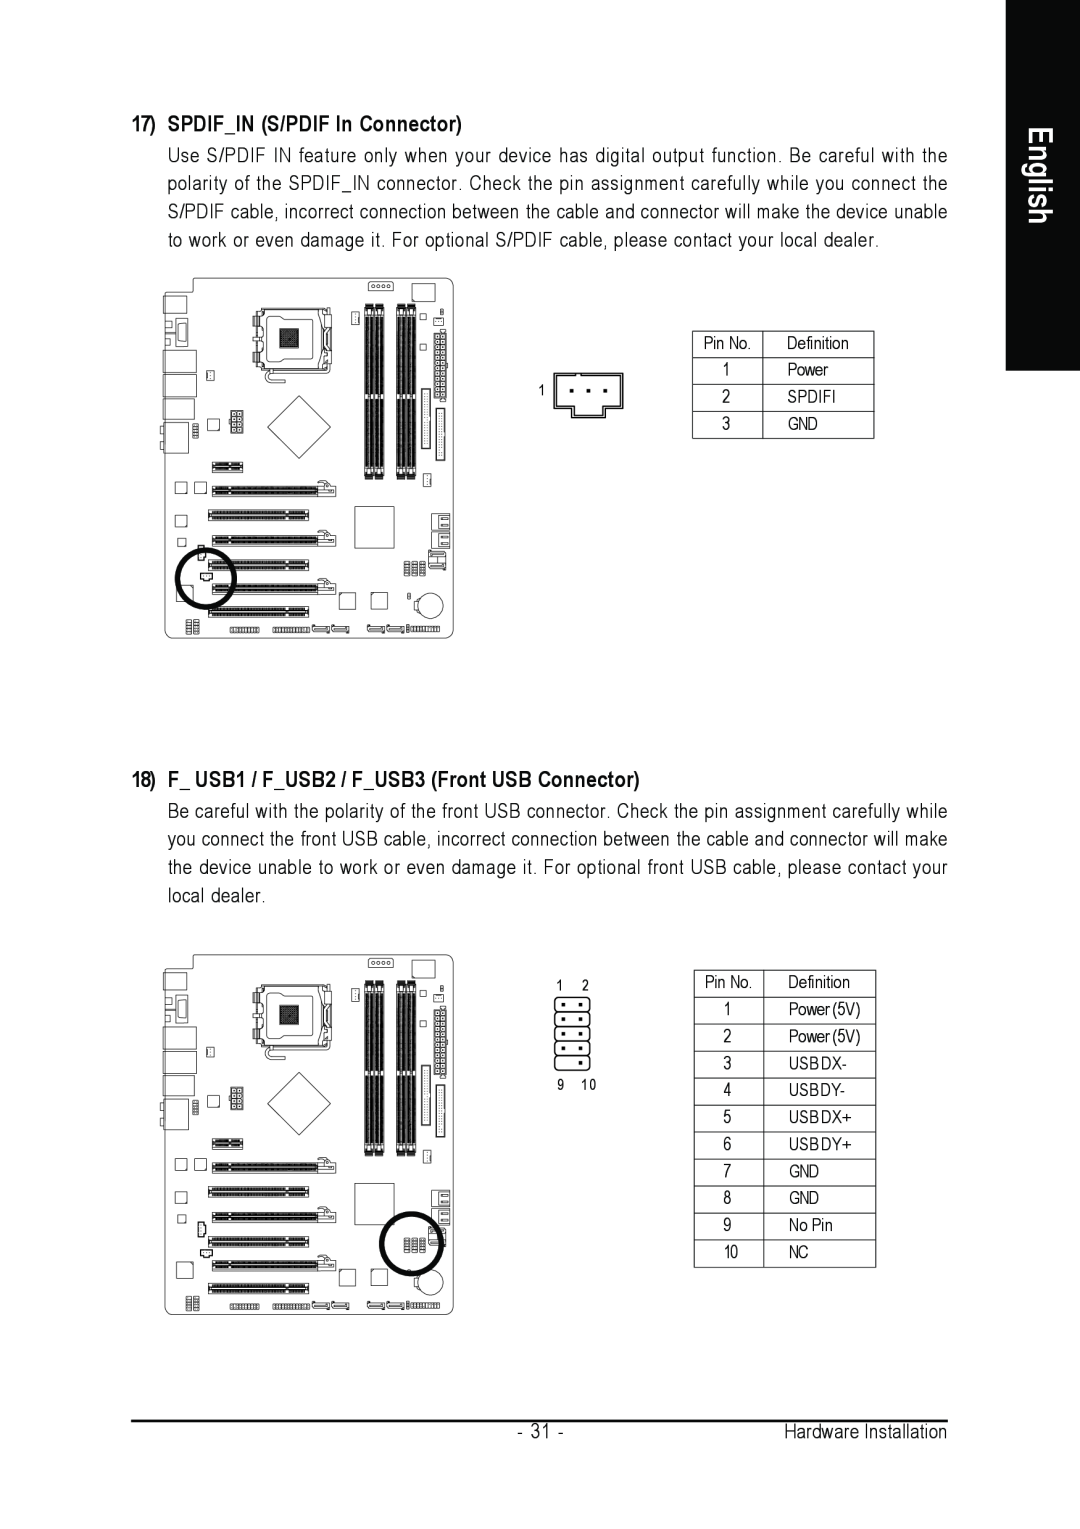 Intel GA-N680SLI-DQ6 user manual SPDIFIN S/PDIF In Connector, F USB1 / FUSB2 / FUSB3 Front USB Connector, English 